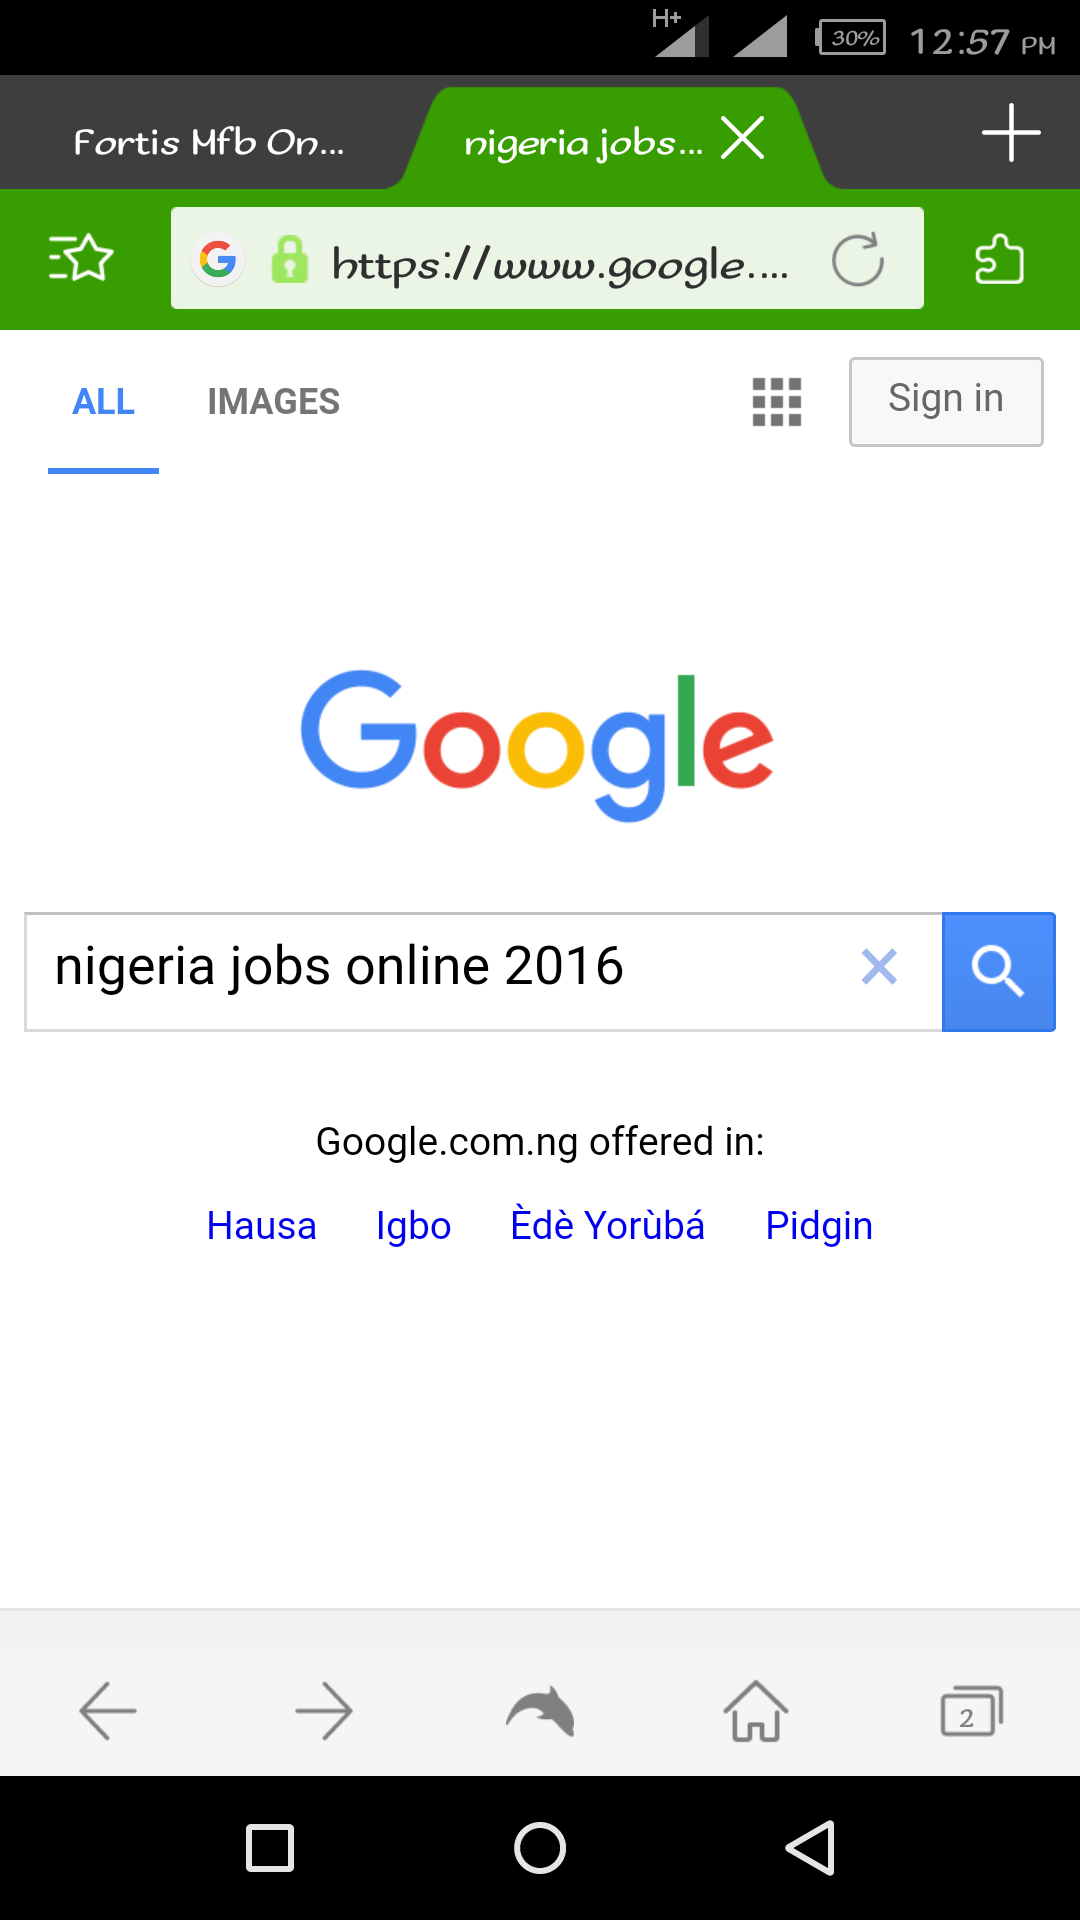 fortis-mfb-online-aptitude-test-invite-for-management-trainee-jobs-vacancies-7-nigeria